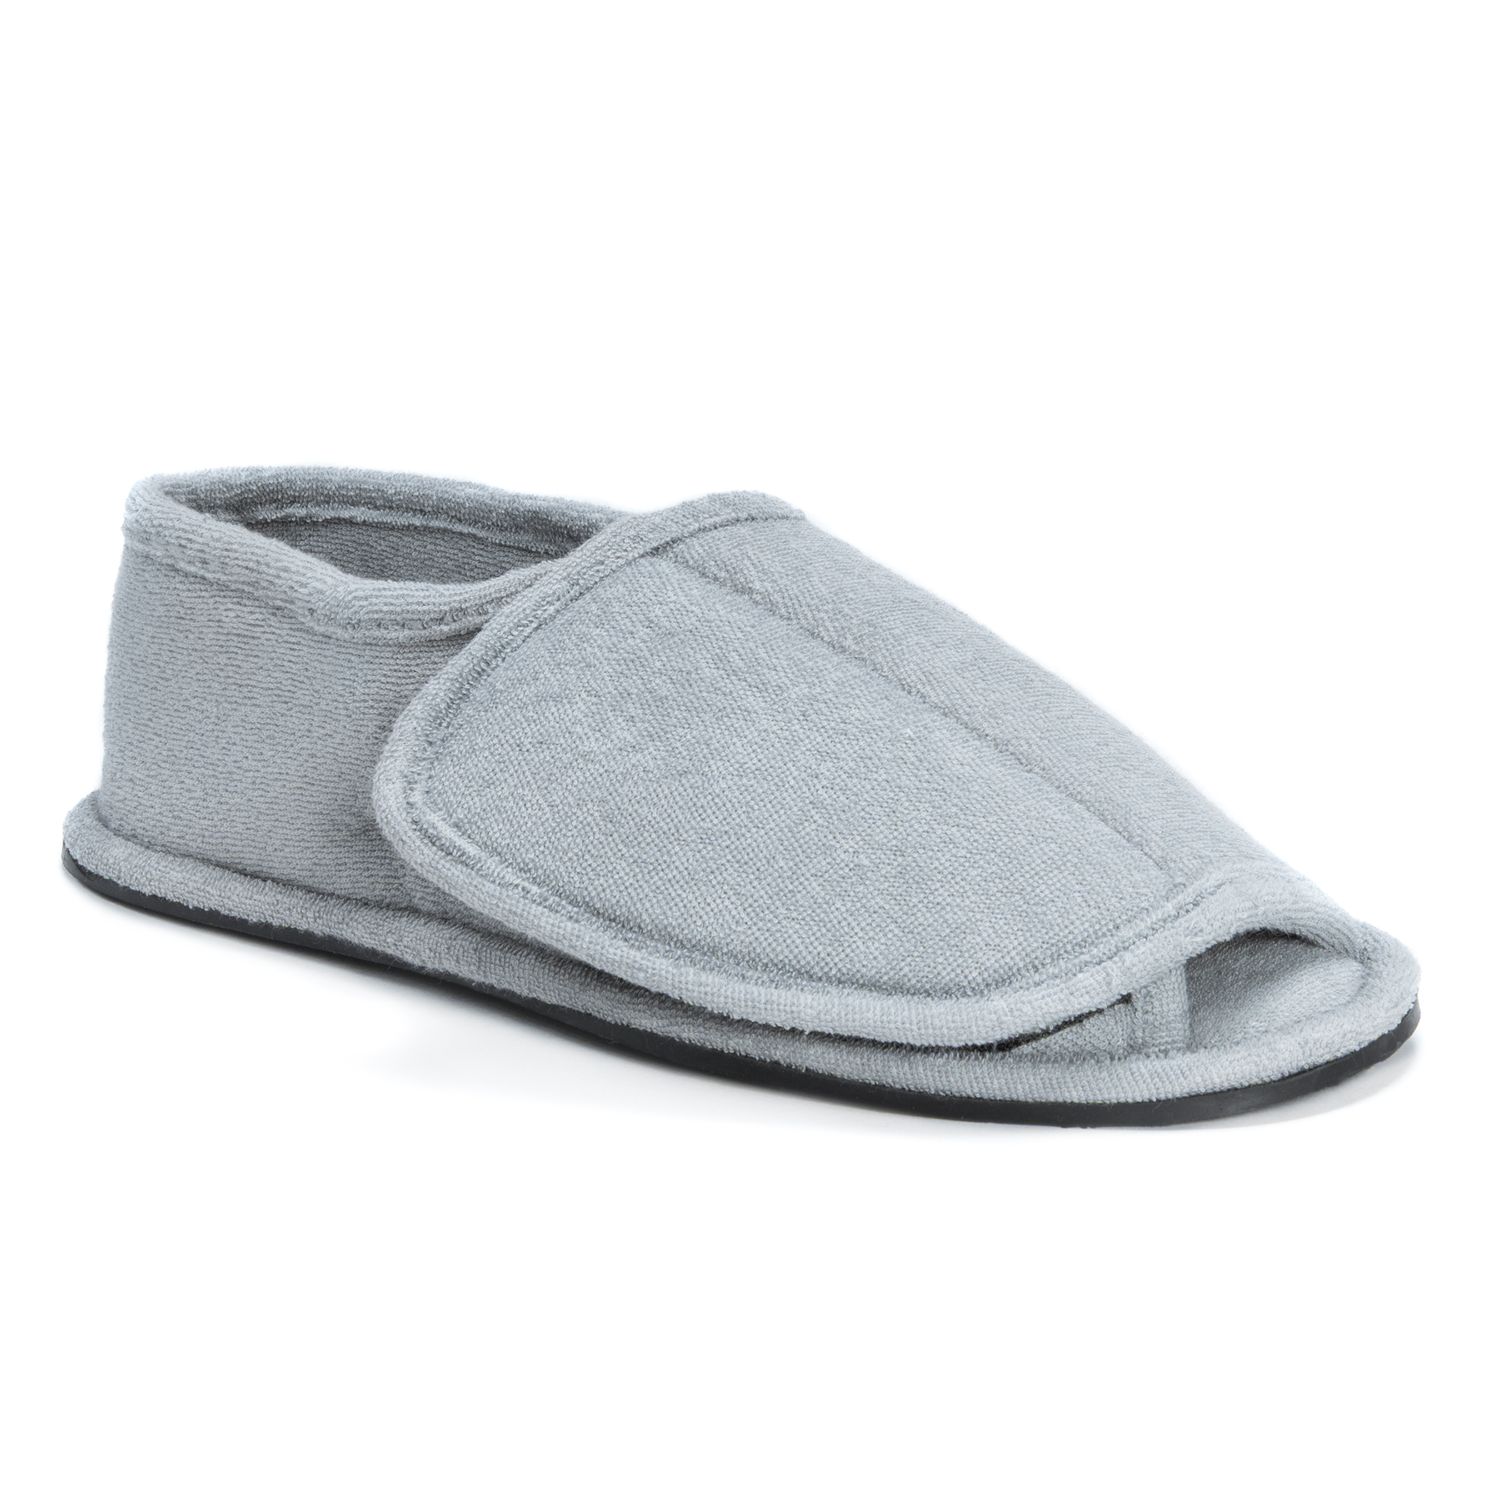 isotoner men's open toe slippers